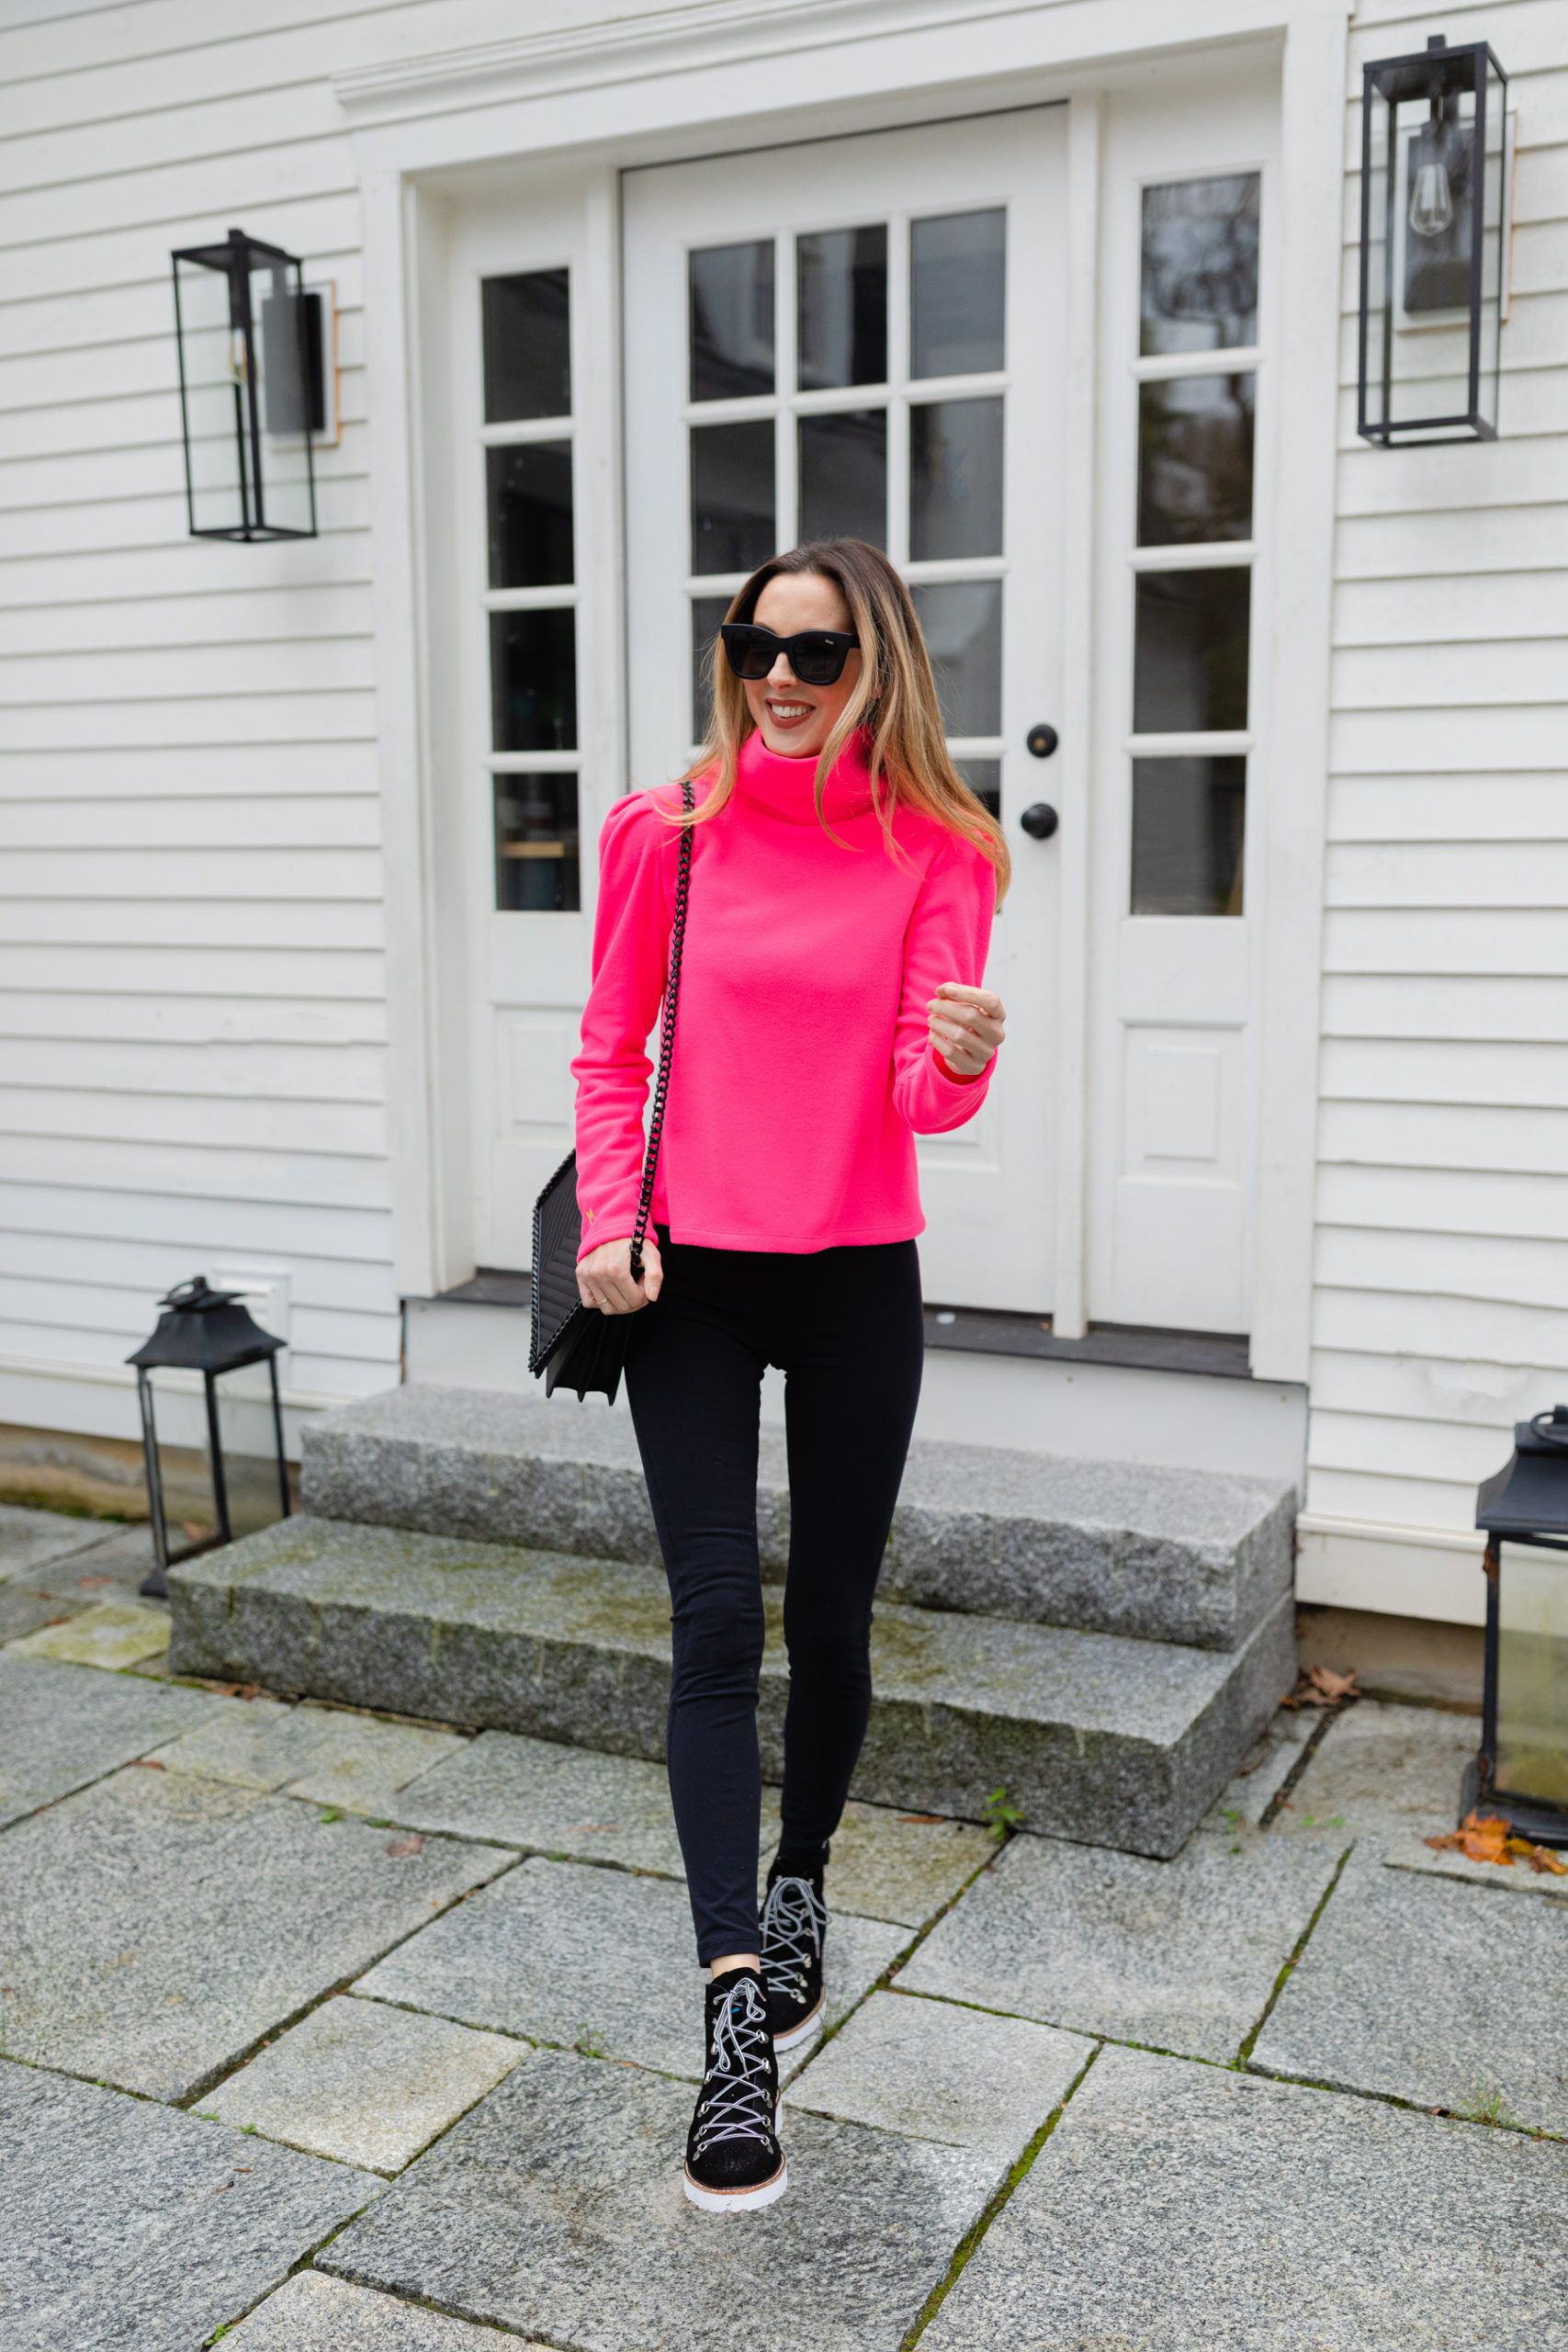 Eva Amurri wears the new Dudley Stephens Palmer Puff Sleeve Fleece in Neon Pink